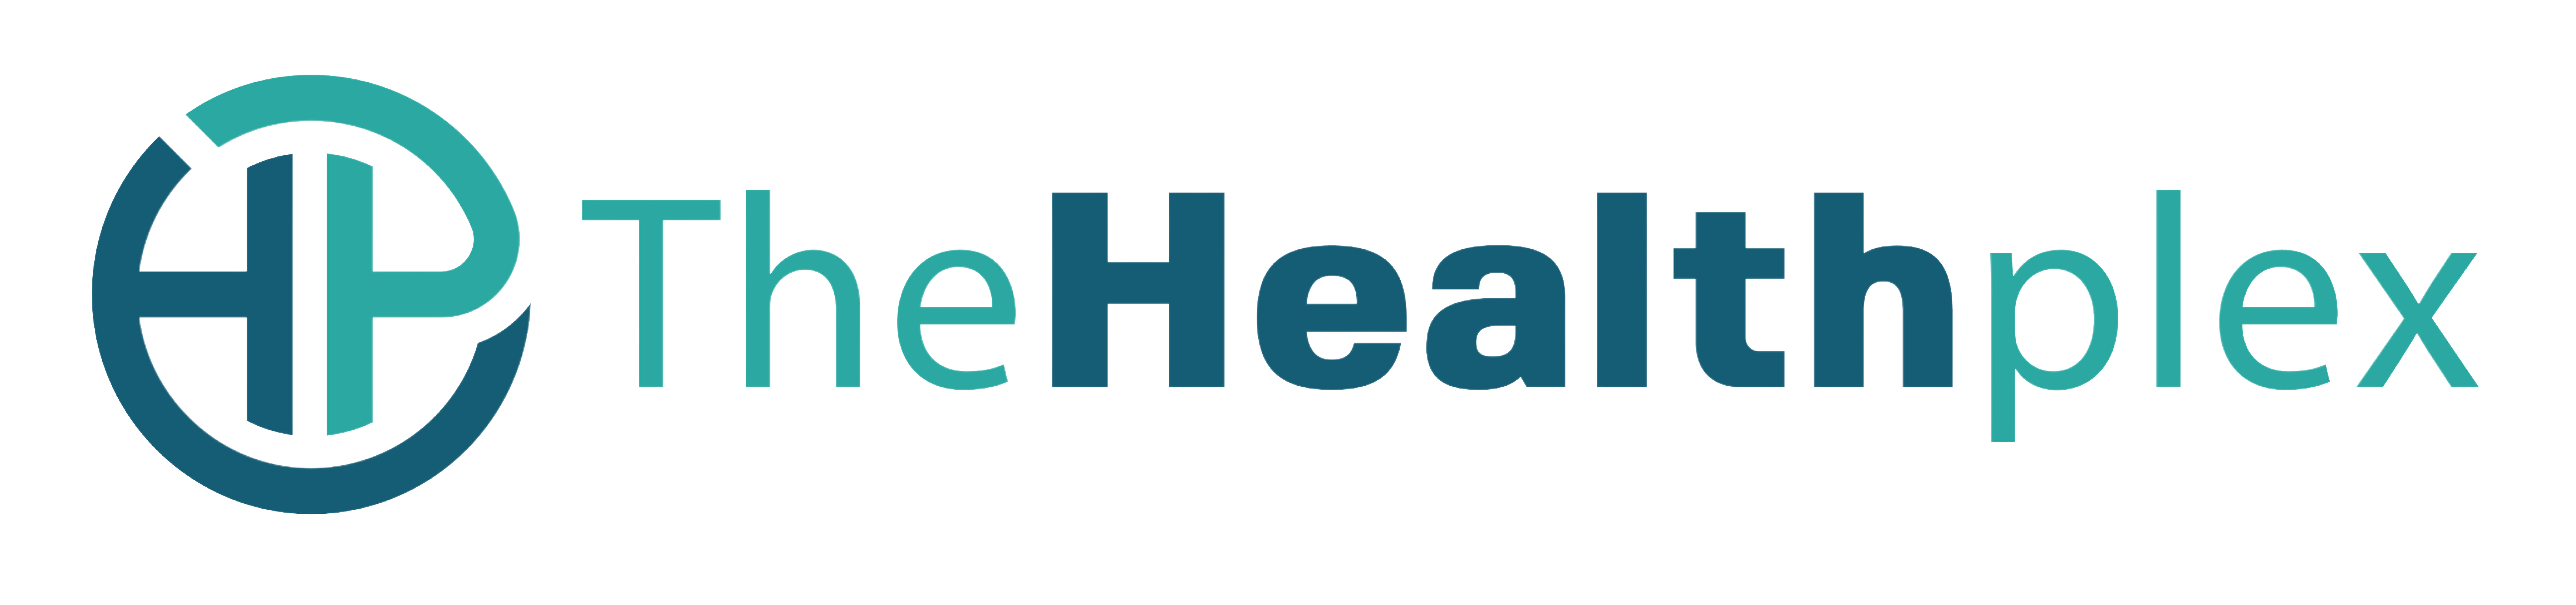 The Healthplex logo